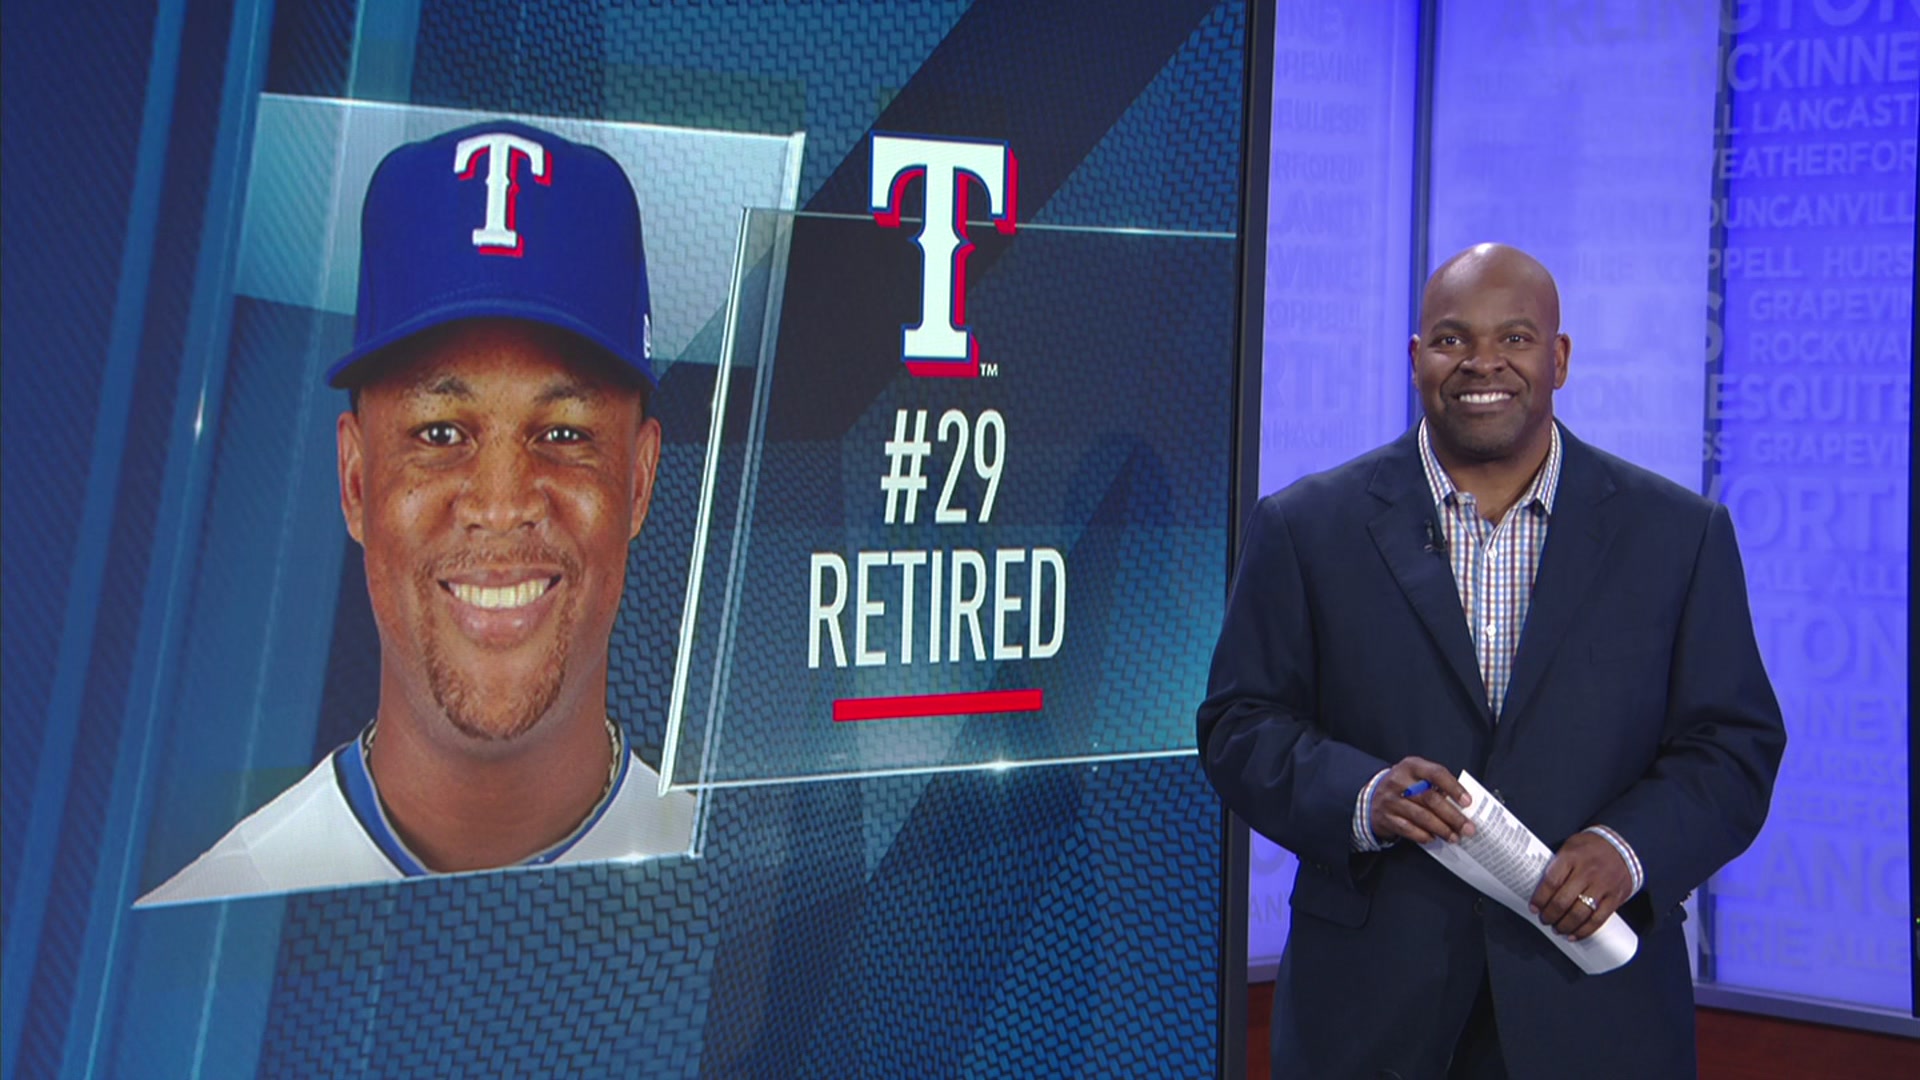 Texas Rangers retiring 29 in honor of Adrian Beltre